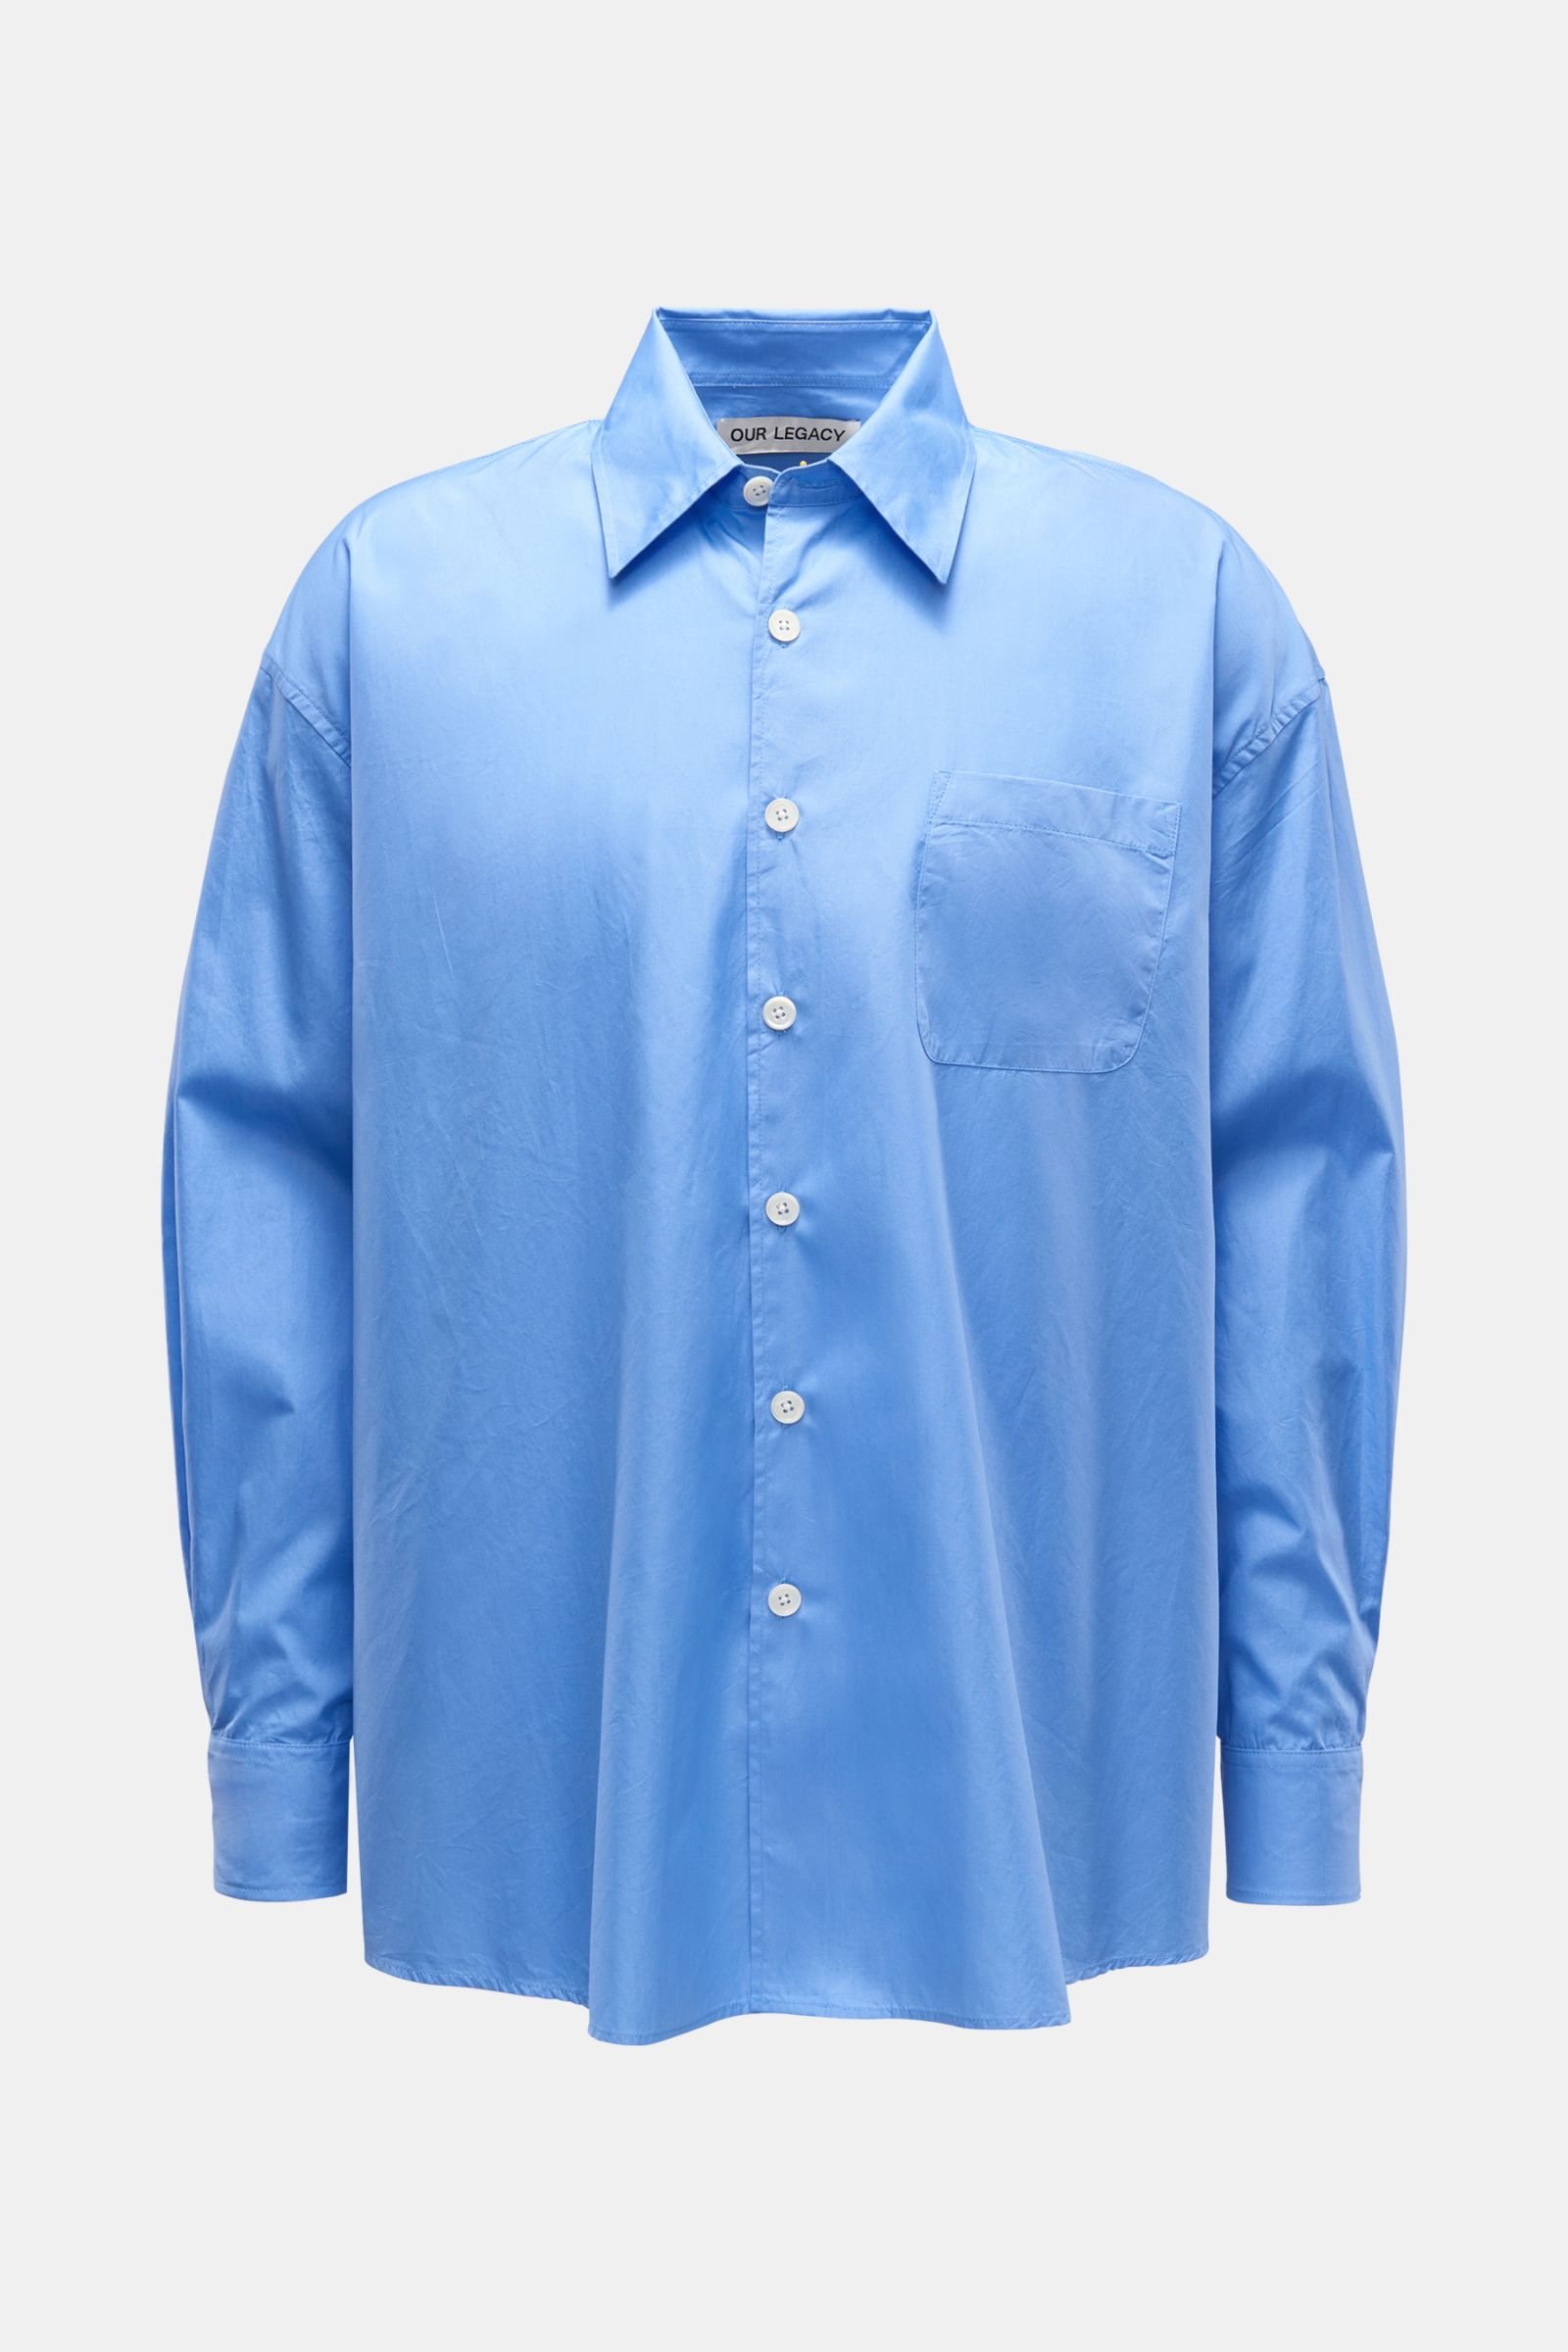 OUR LEGACY casual shirt 'Borrowed Shirt' Kent collar light blue